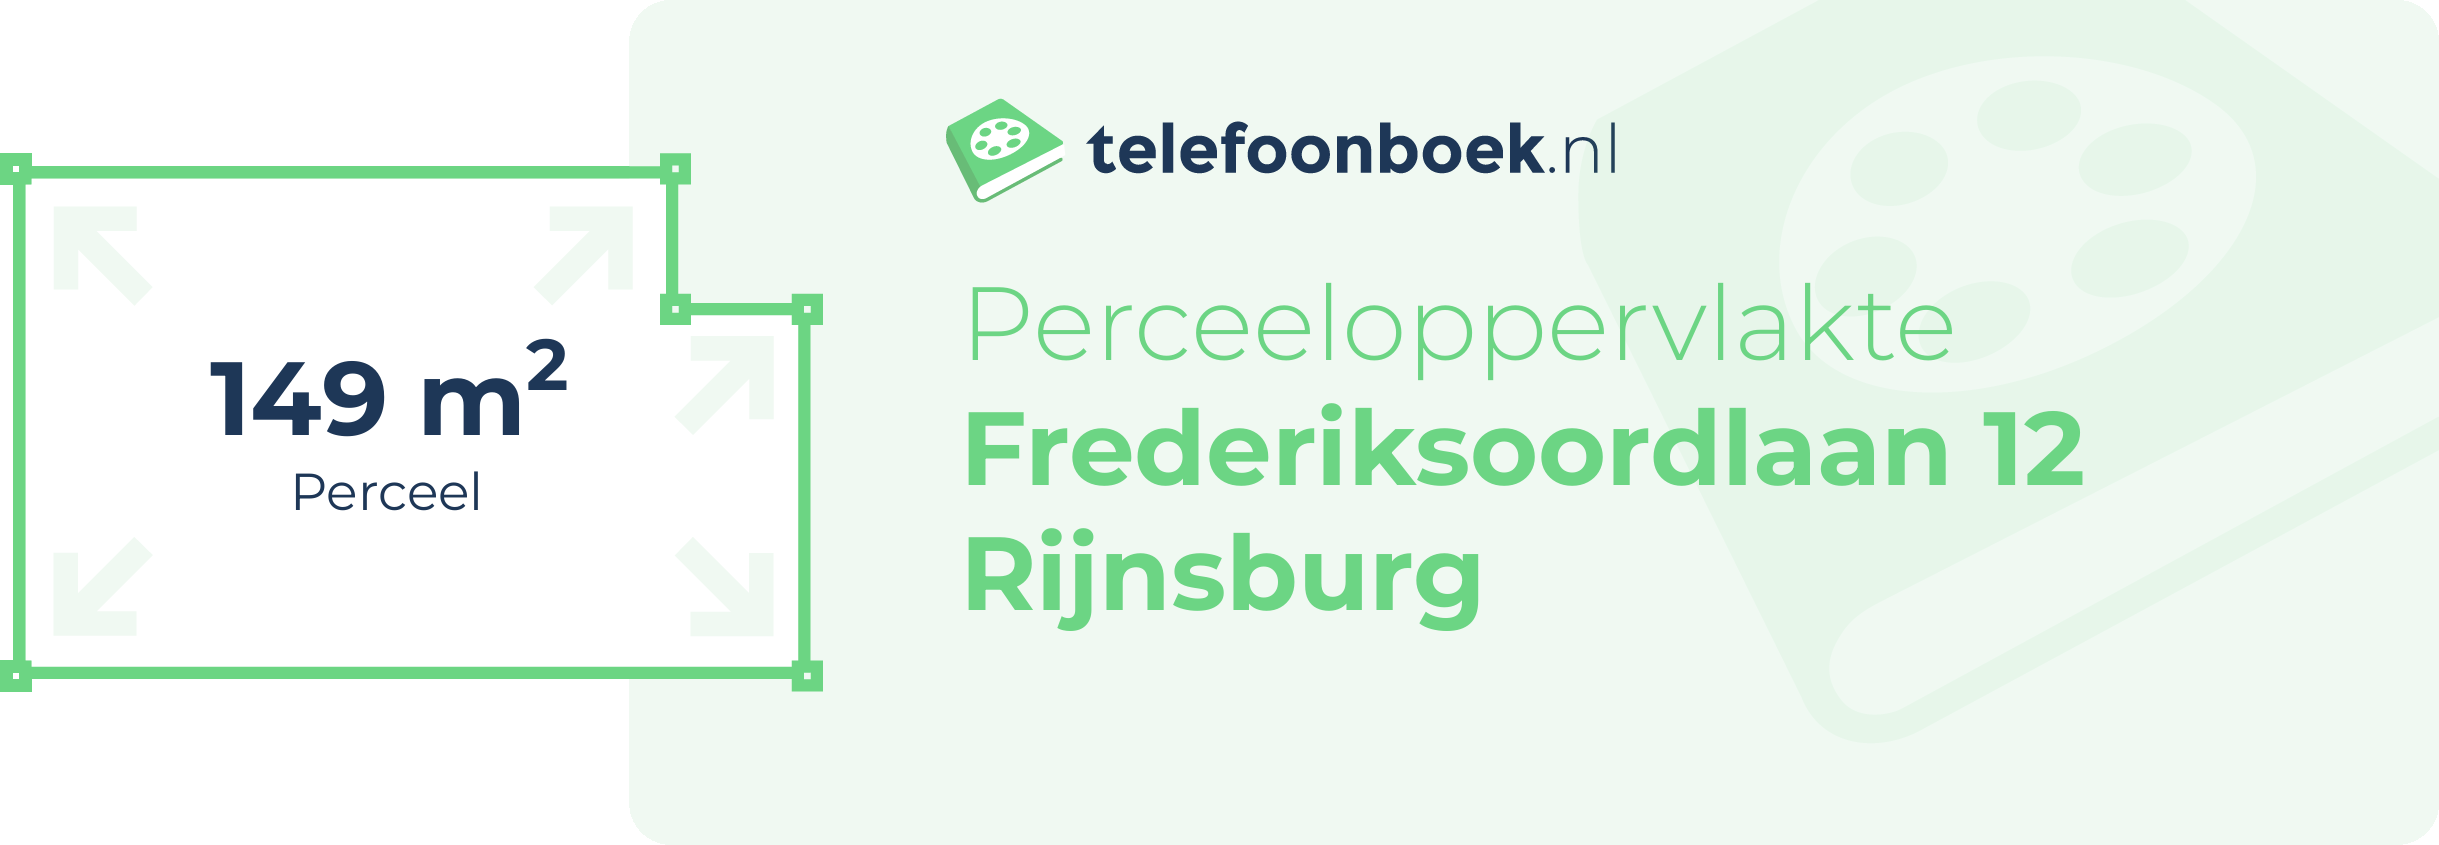 Perceeloppervlakte Frederiksoordlaan 12 Rijnsburg